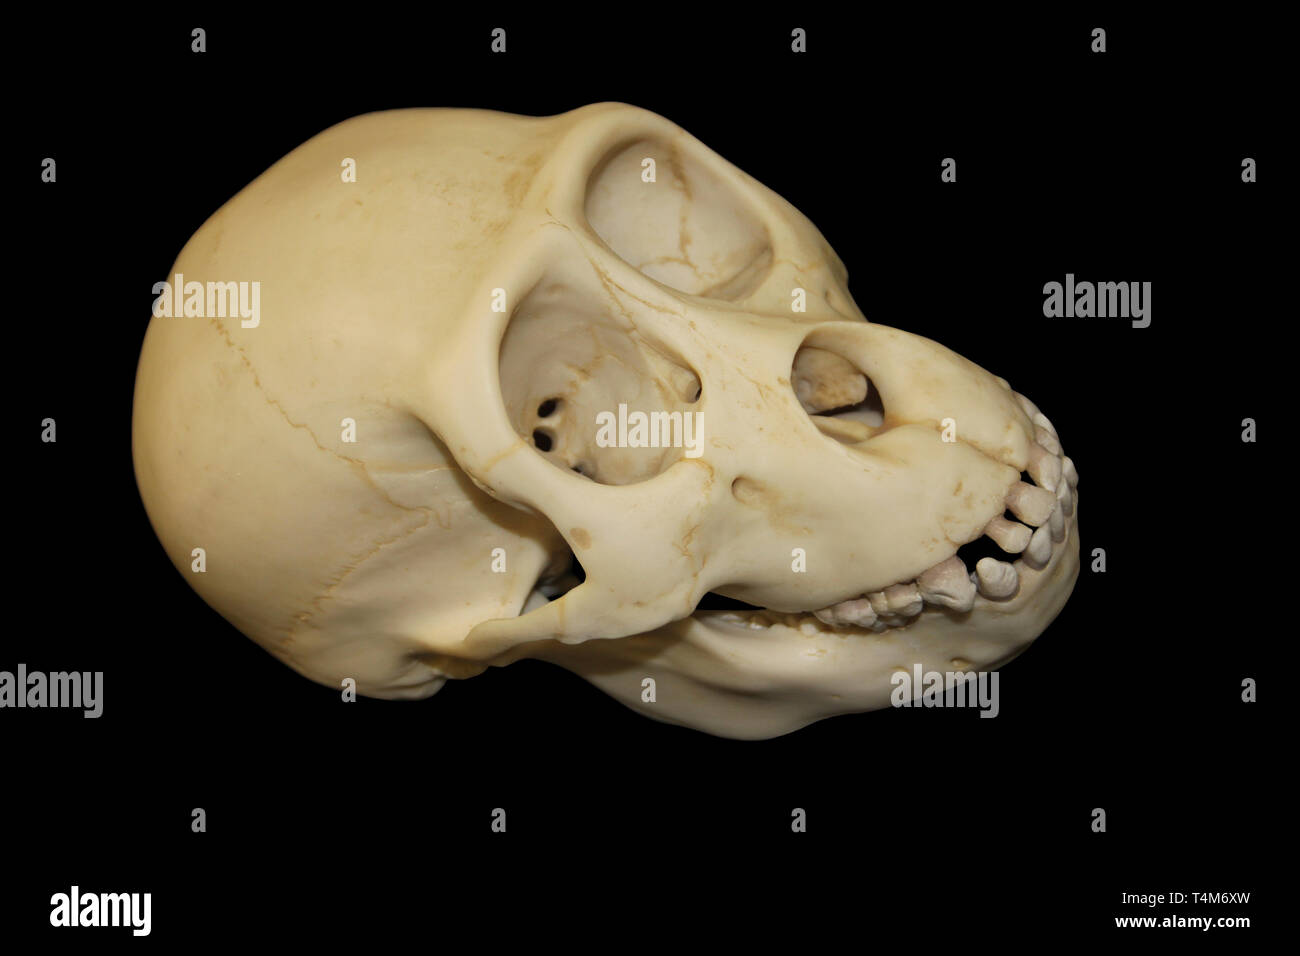 Young Gorilla Skull Stock Photo